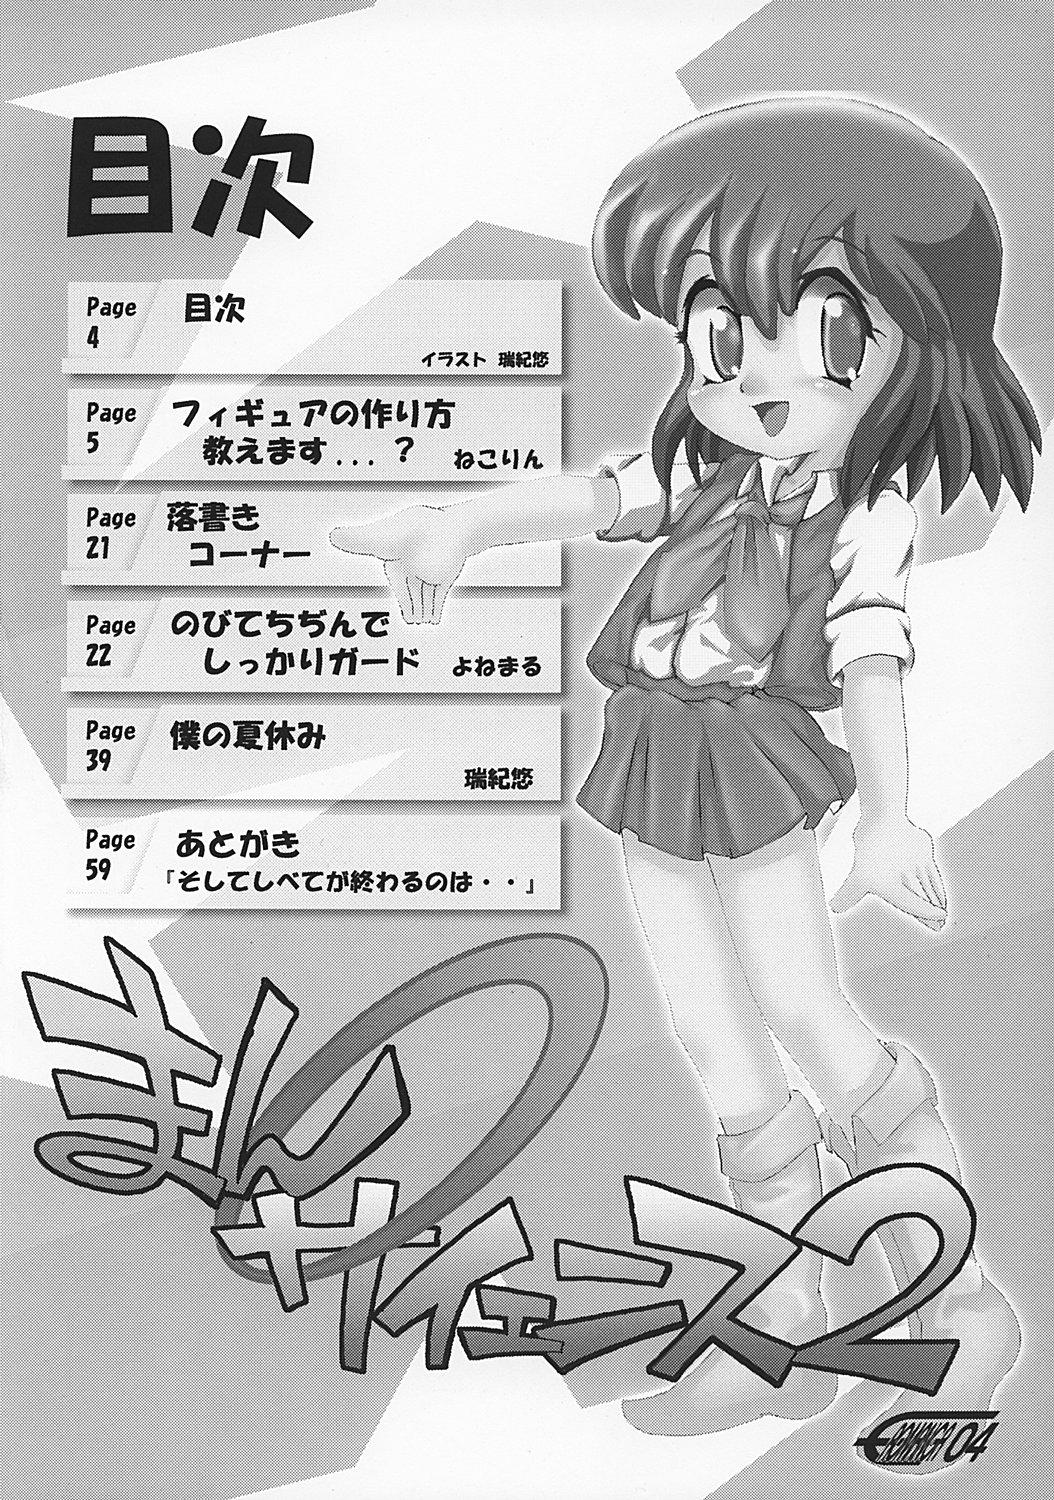 Titten Manga Science 2 - Onnanoko no Himitsu Eng Sub - Page 3